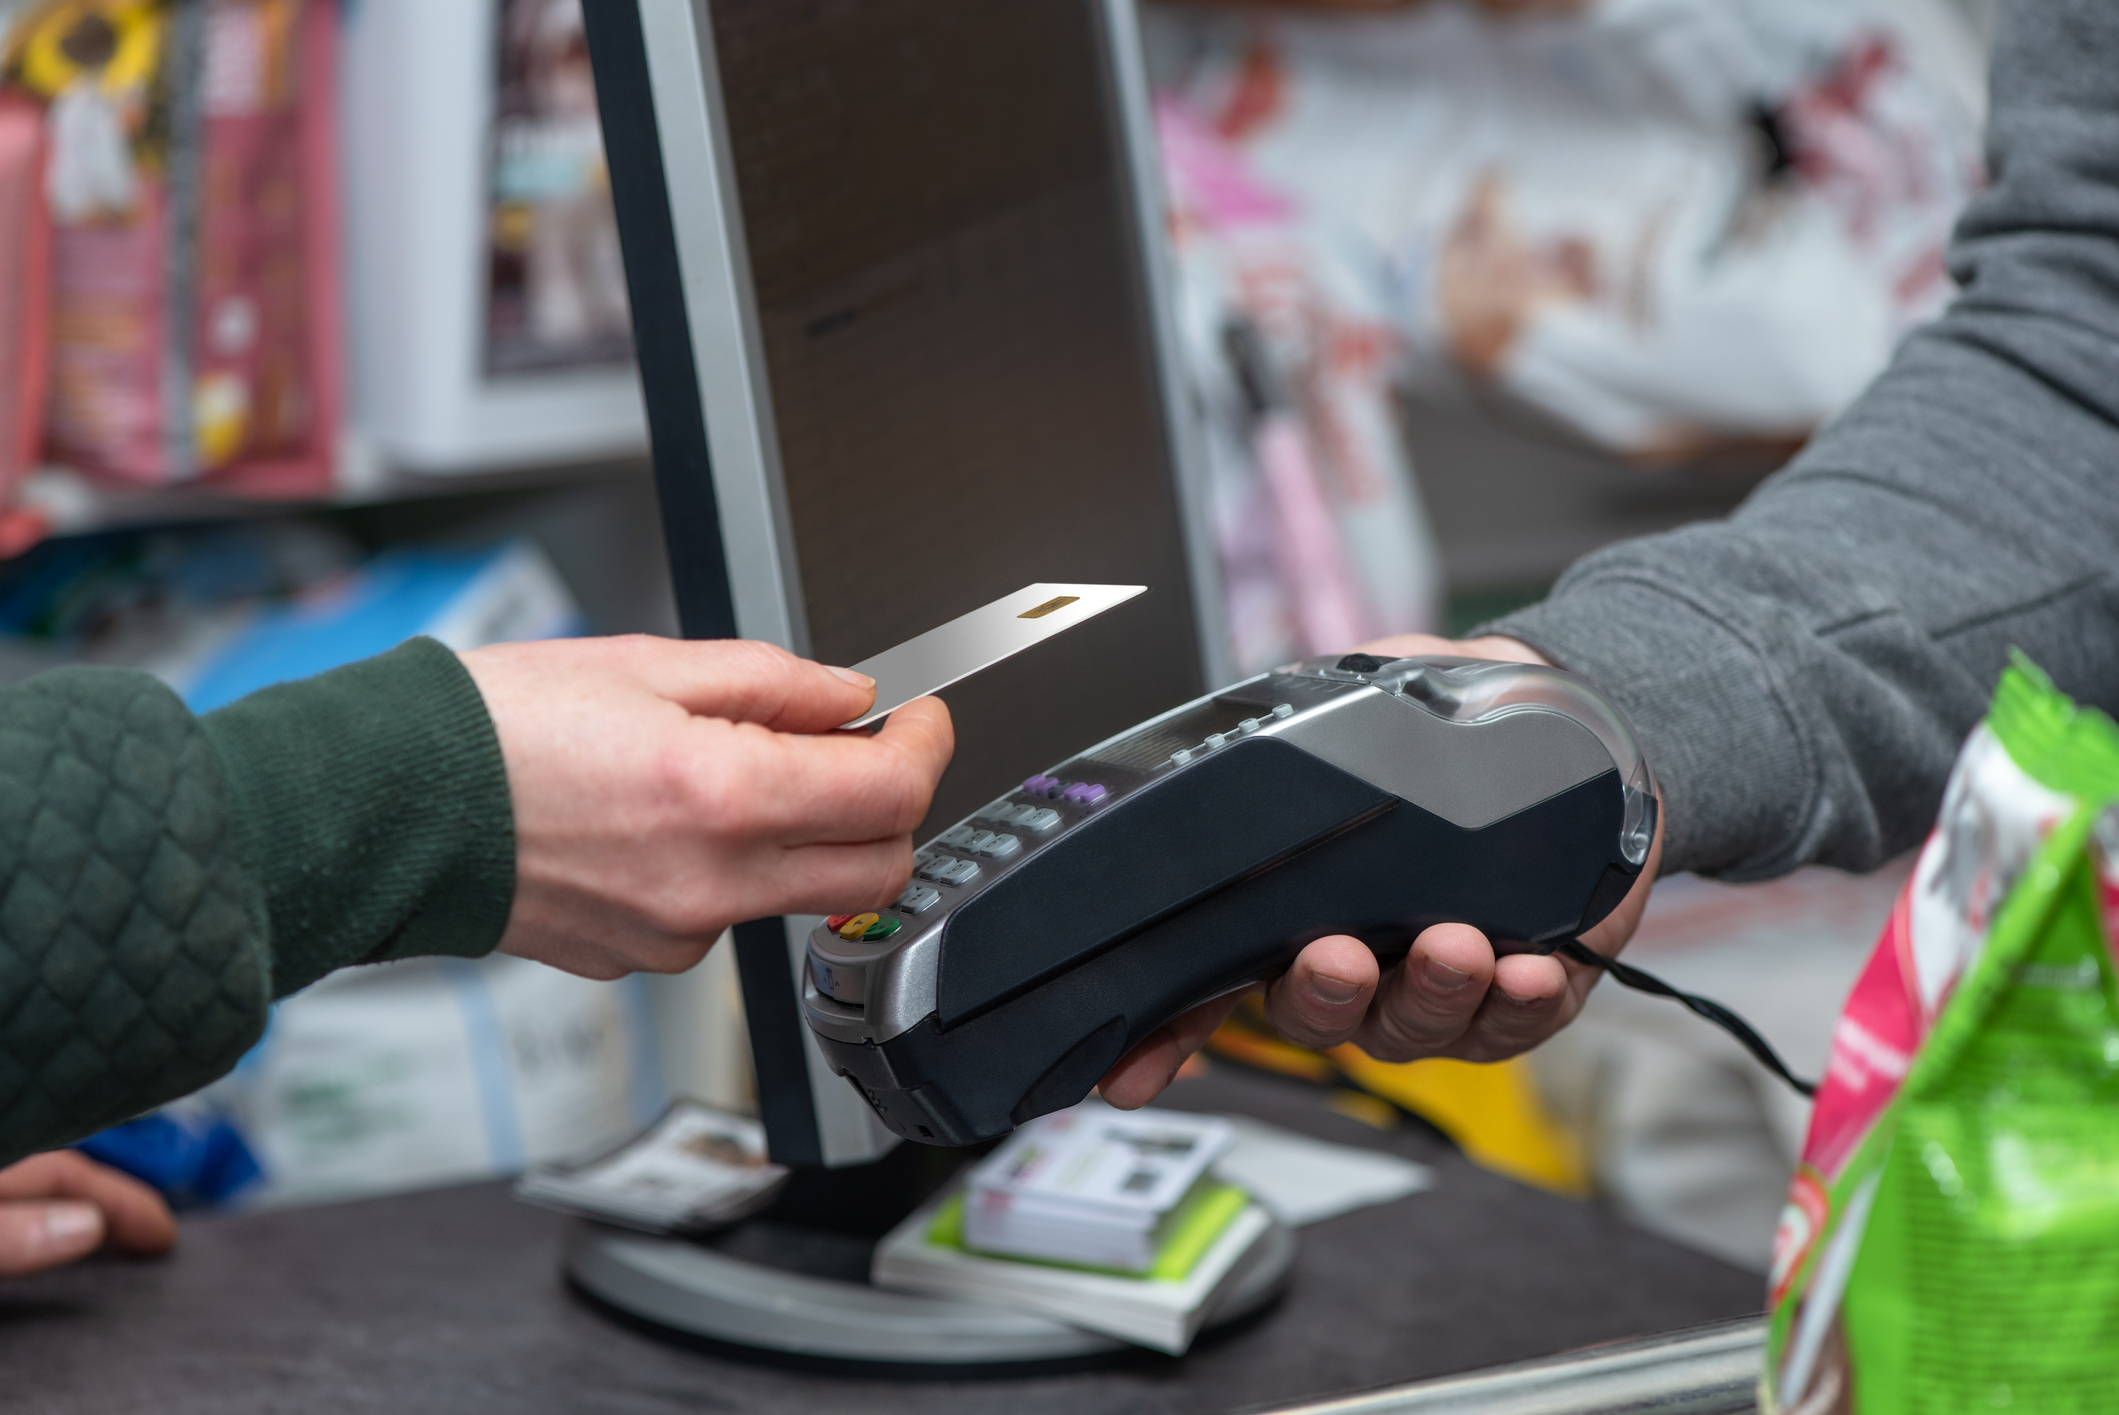 Credit Card Machines 101: Understanding Payment Terminals